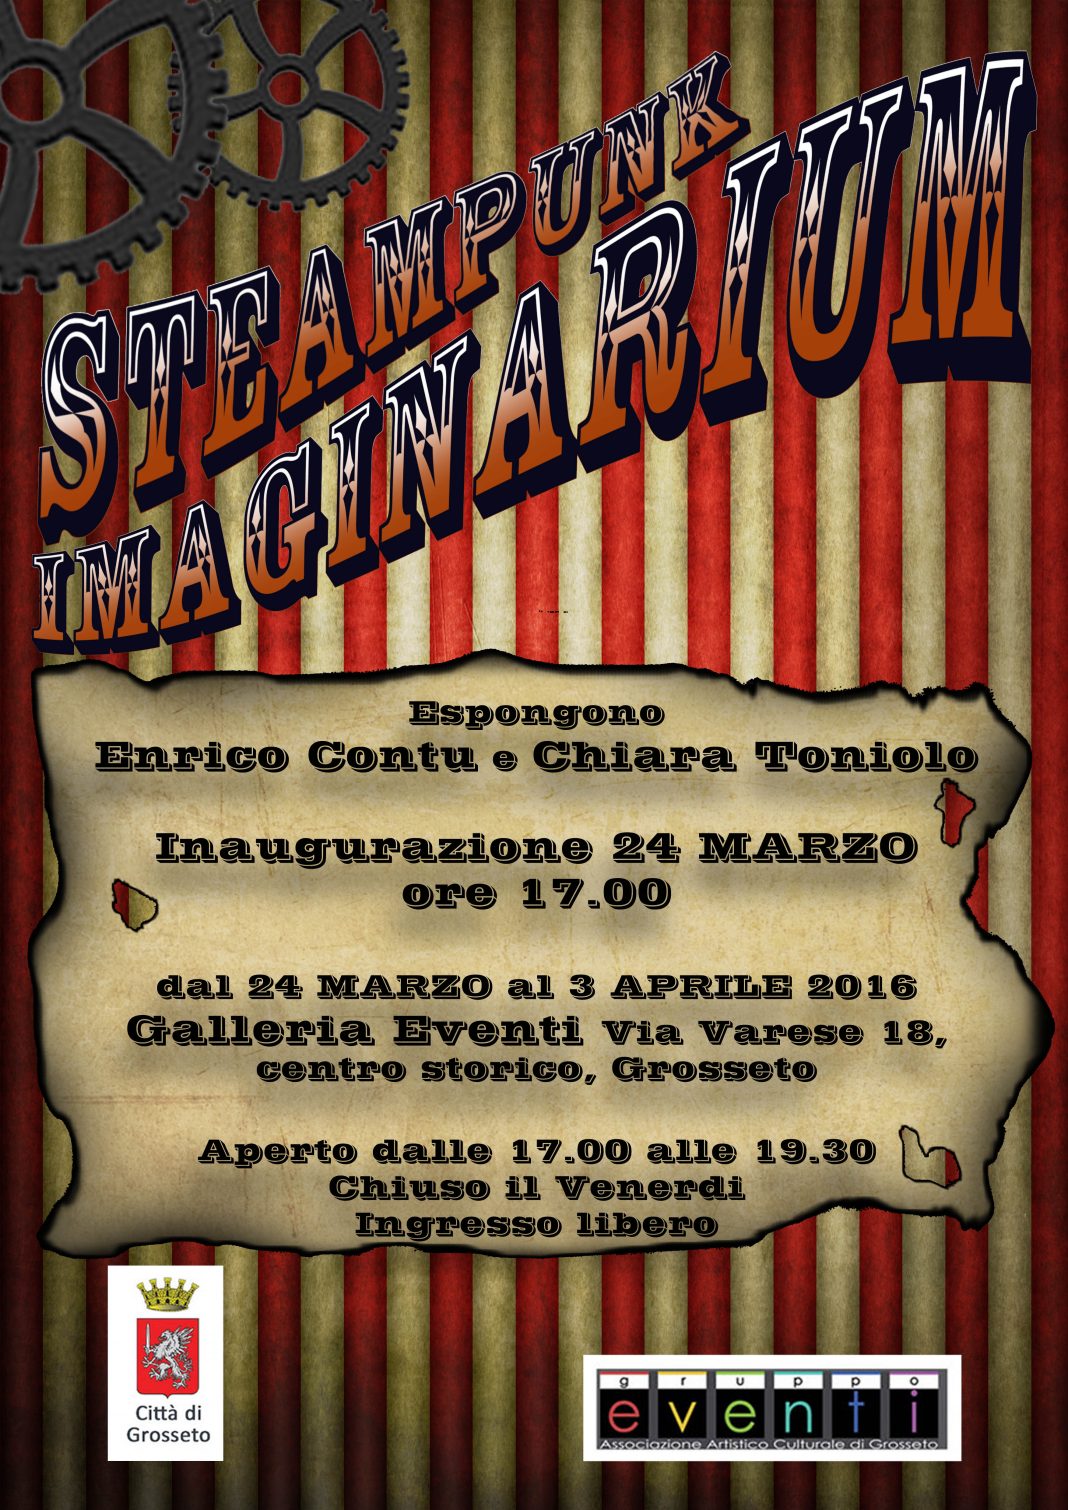 Chiara Toniolo / Enrico Contu – Steampunk Imaginariumhttps://www.exibart.com/repository/media/eventi/2016/03/chiara-toniolo-enrico-contu-8211-steampunk-imaginarium-1068x1510.jpg